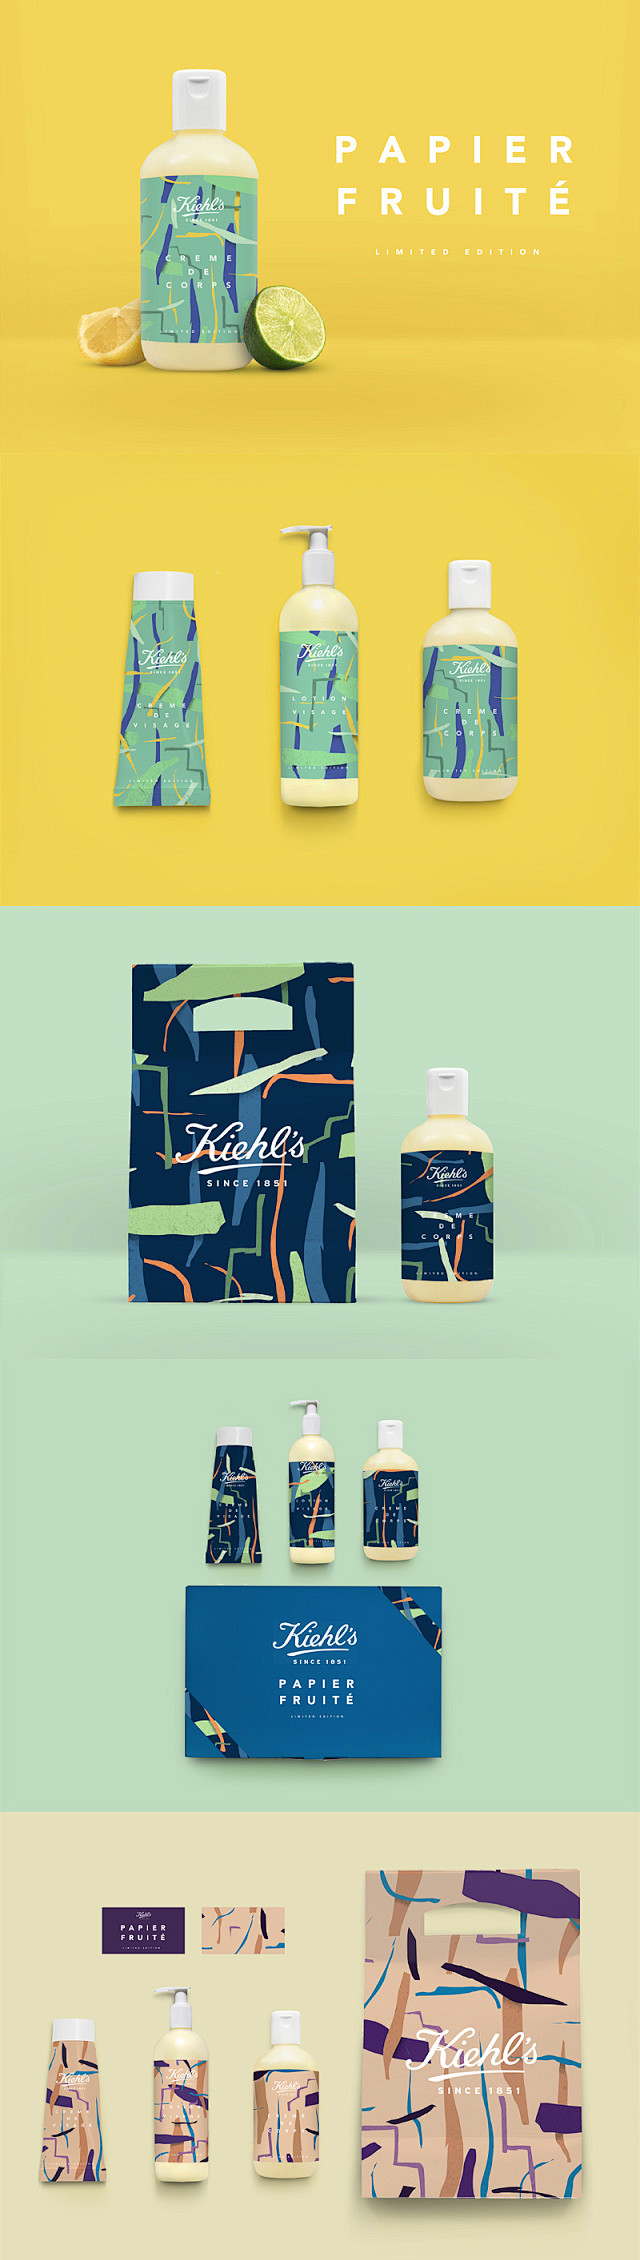 Kiehl's水果香味化妆品包装设计